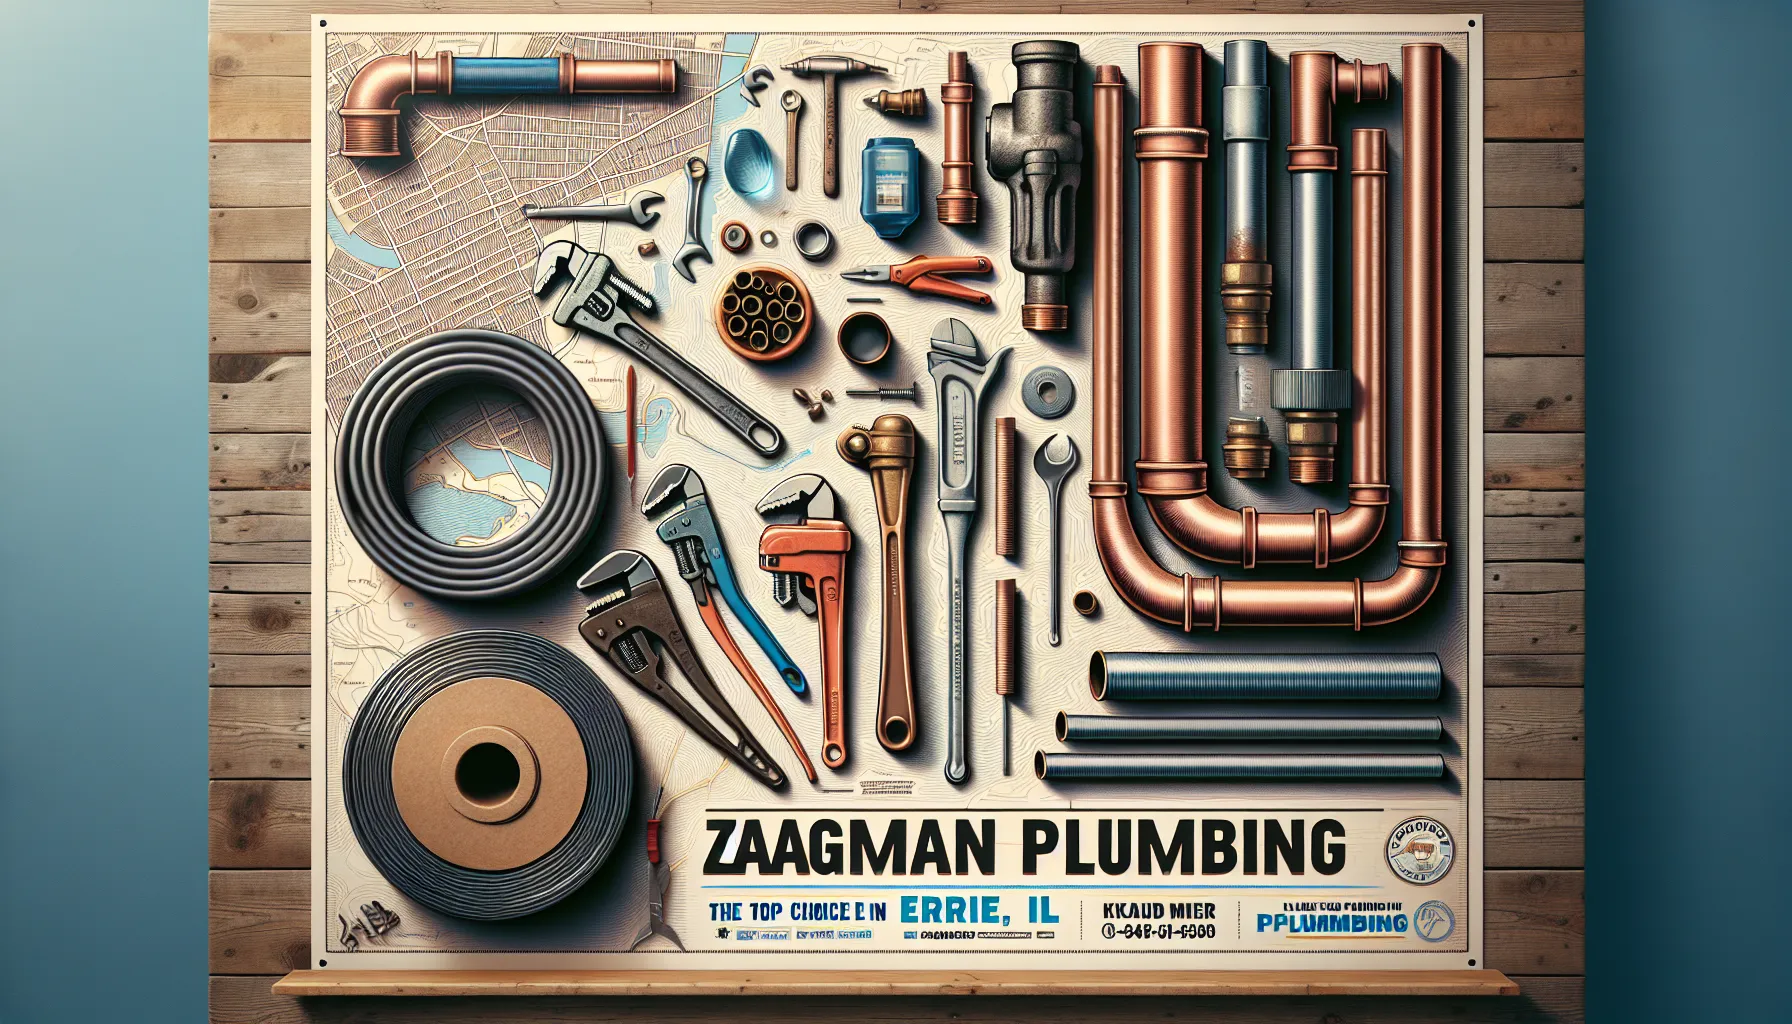 Zaagman Plumbing: The Top Choice for Erie, IL's Plumbing Needs